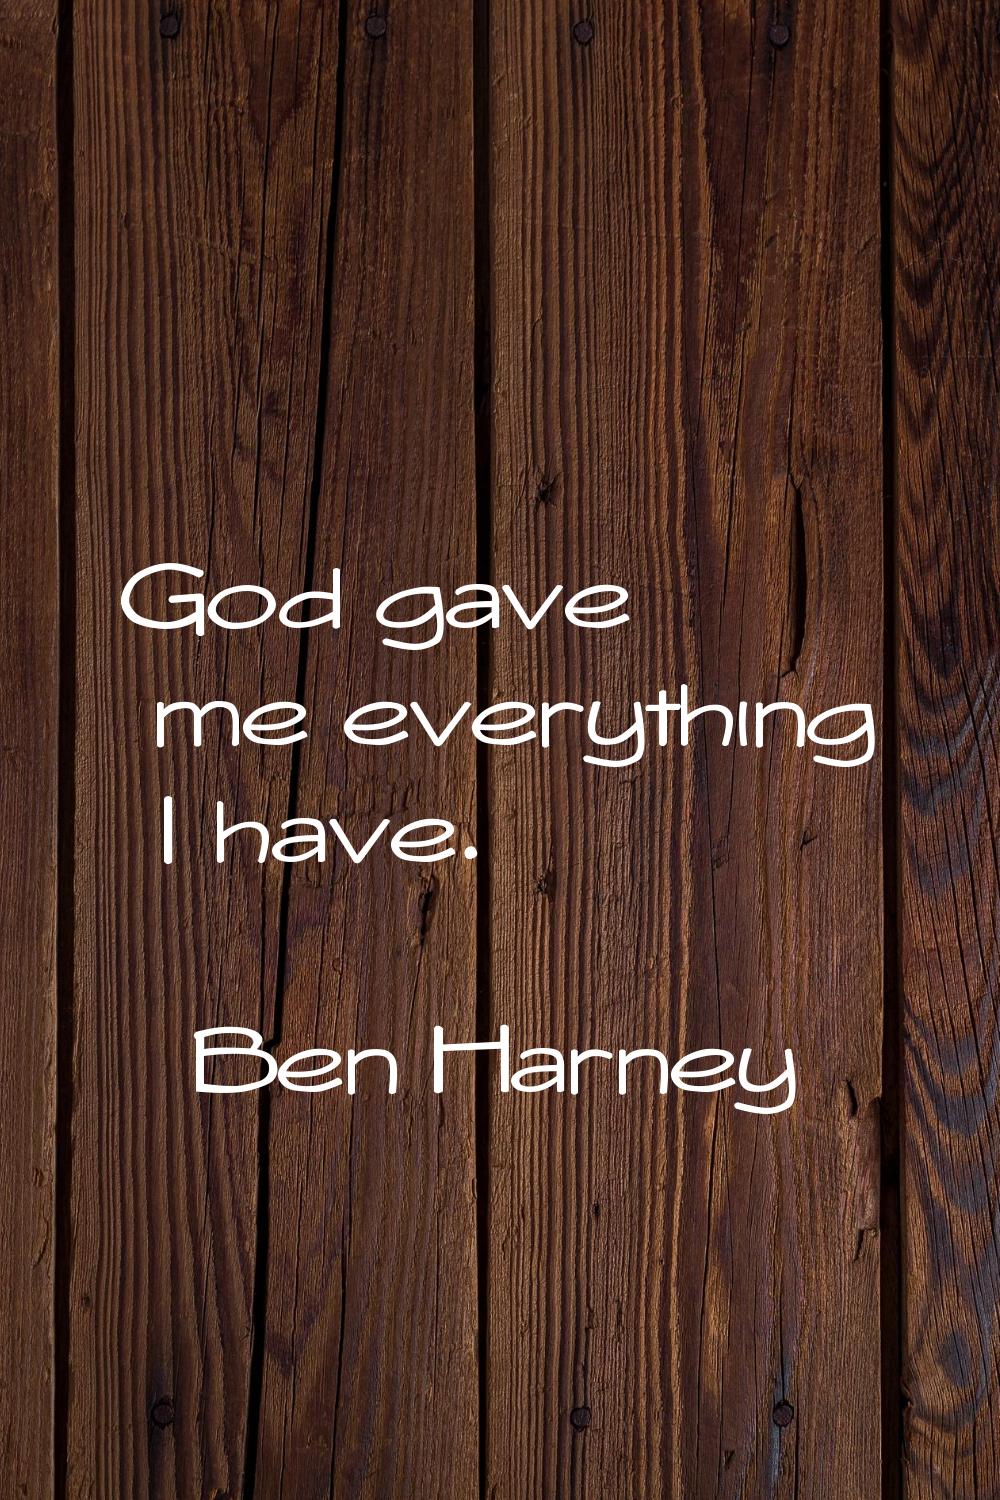 God gave me everything I have.